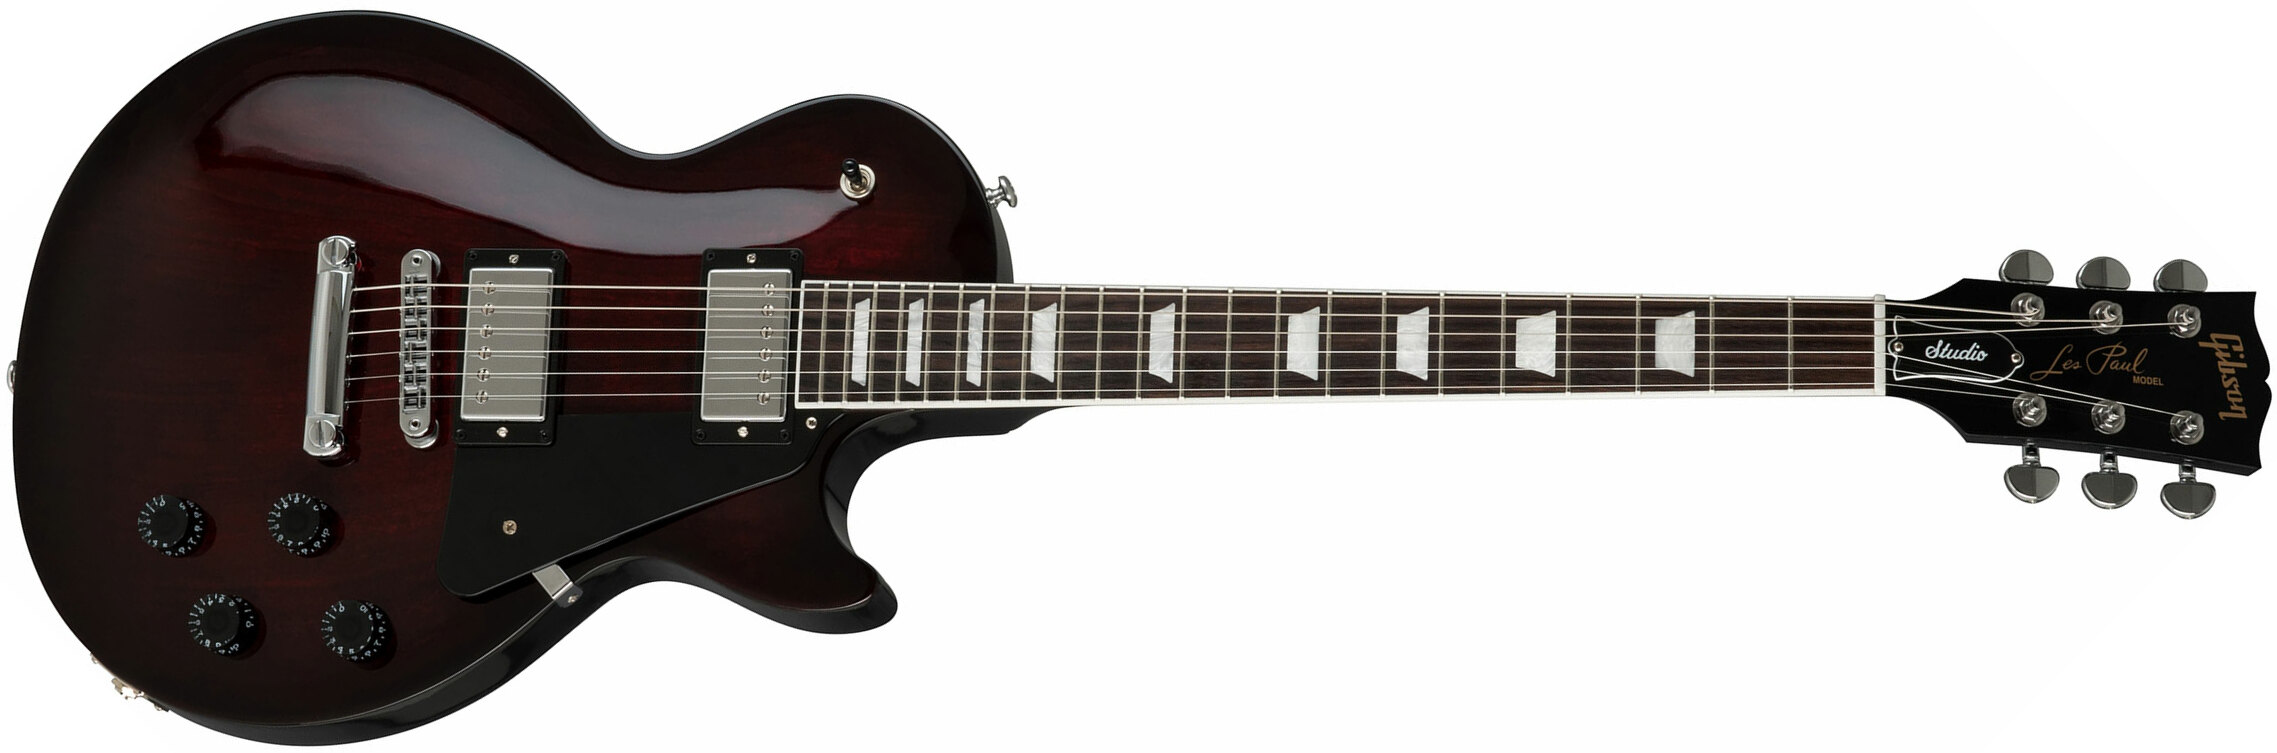 Gibson Les Paul Studio 2019 Hh Ht Rw - Bbq Burst - Single cut electric guitar - Main picture